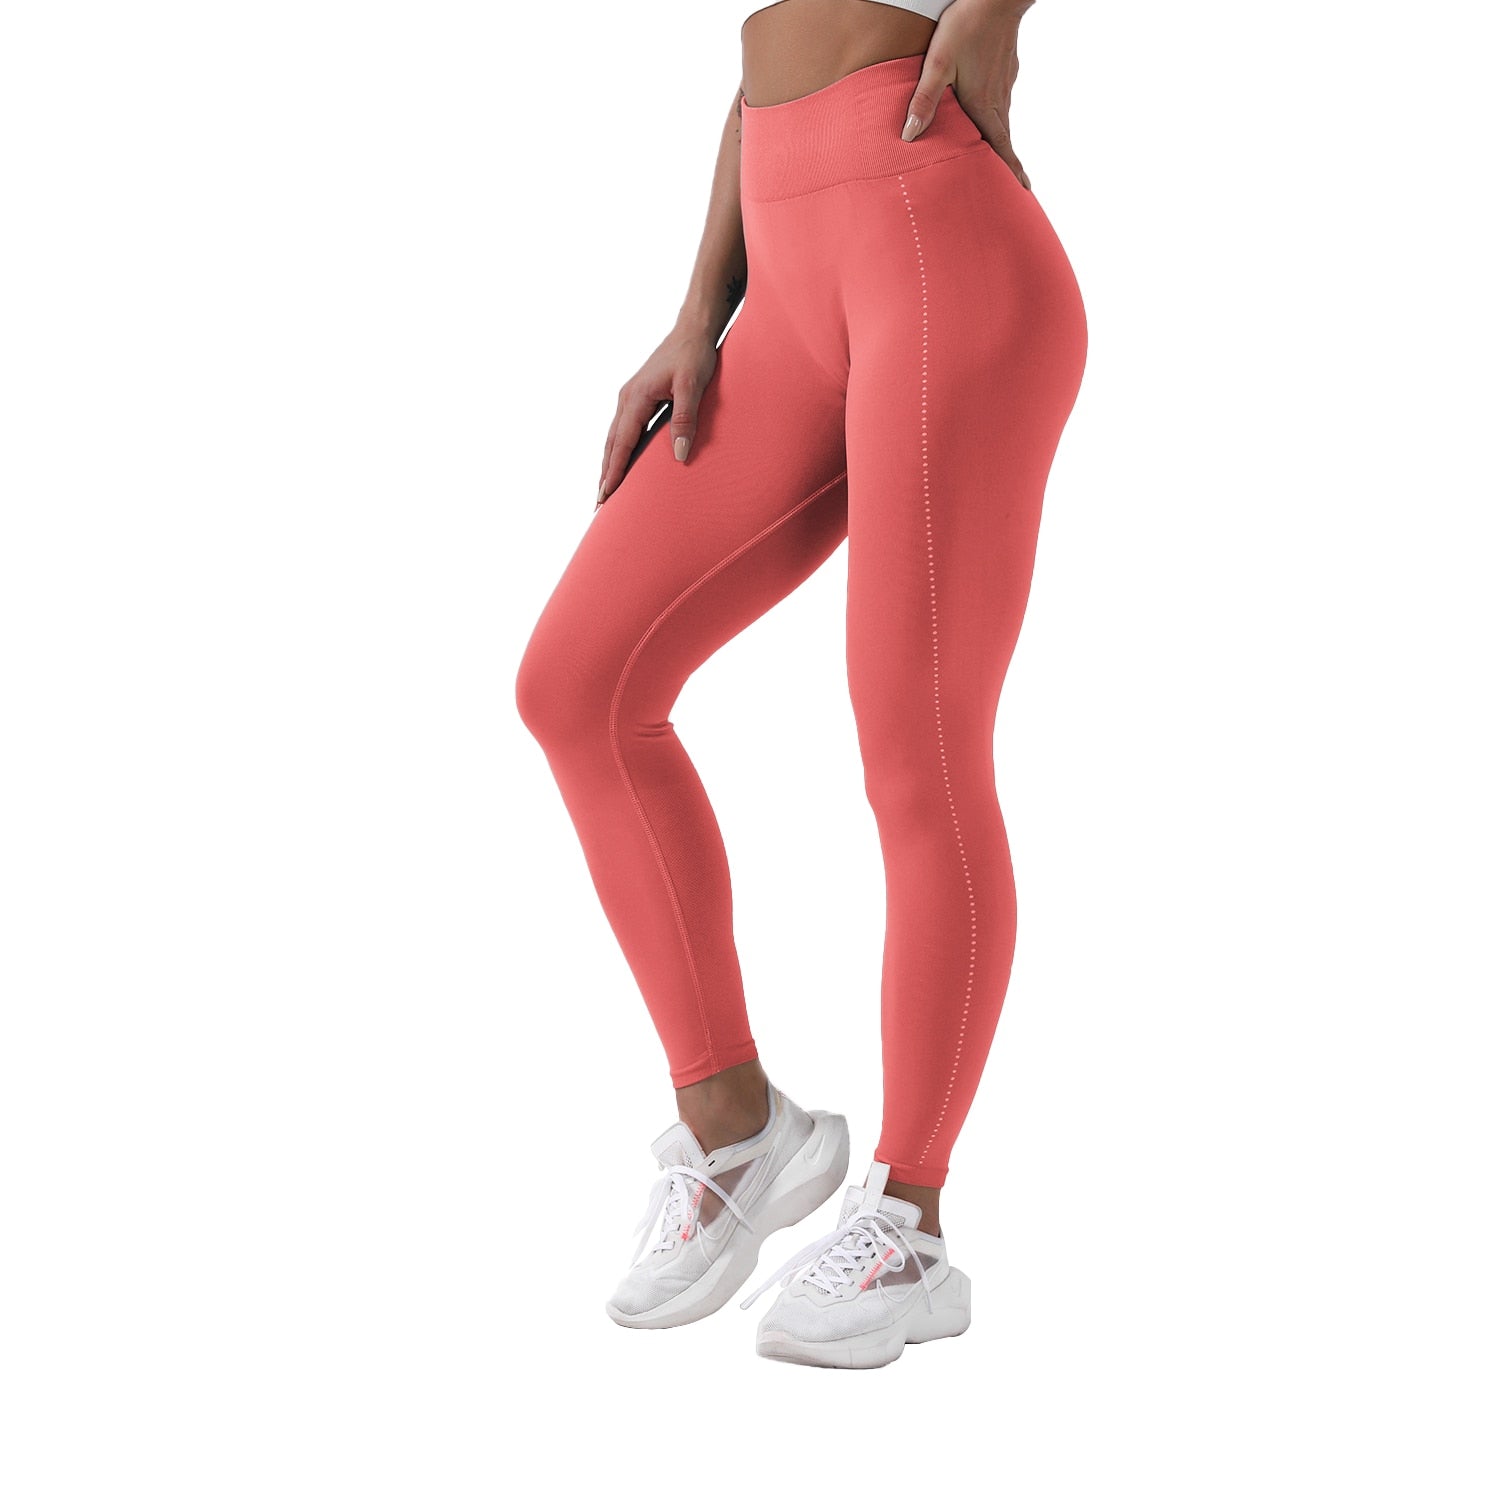 New Seamless Sport Set Women Drawstring Crop Top Leggings Tank Workout Tops Outfit Fitness Gym Running Suit Wear Yoga Set A001